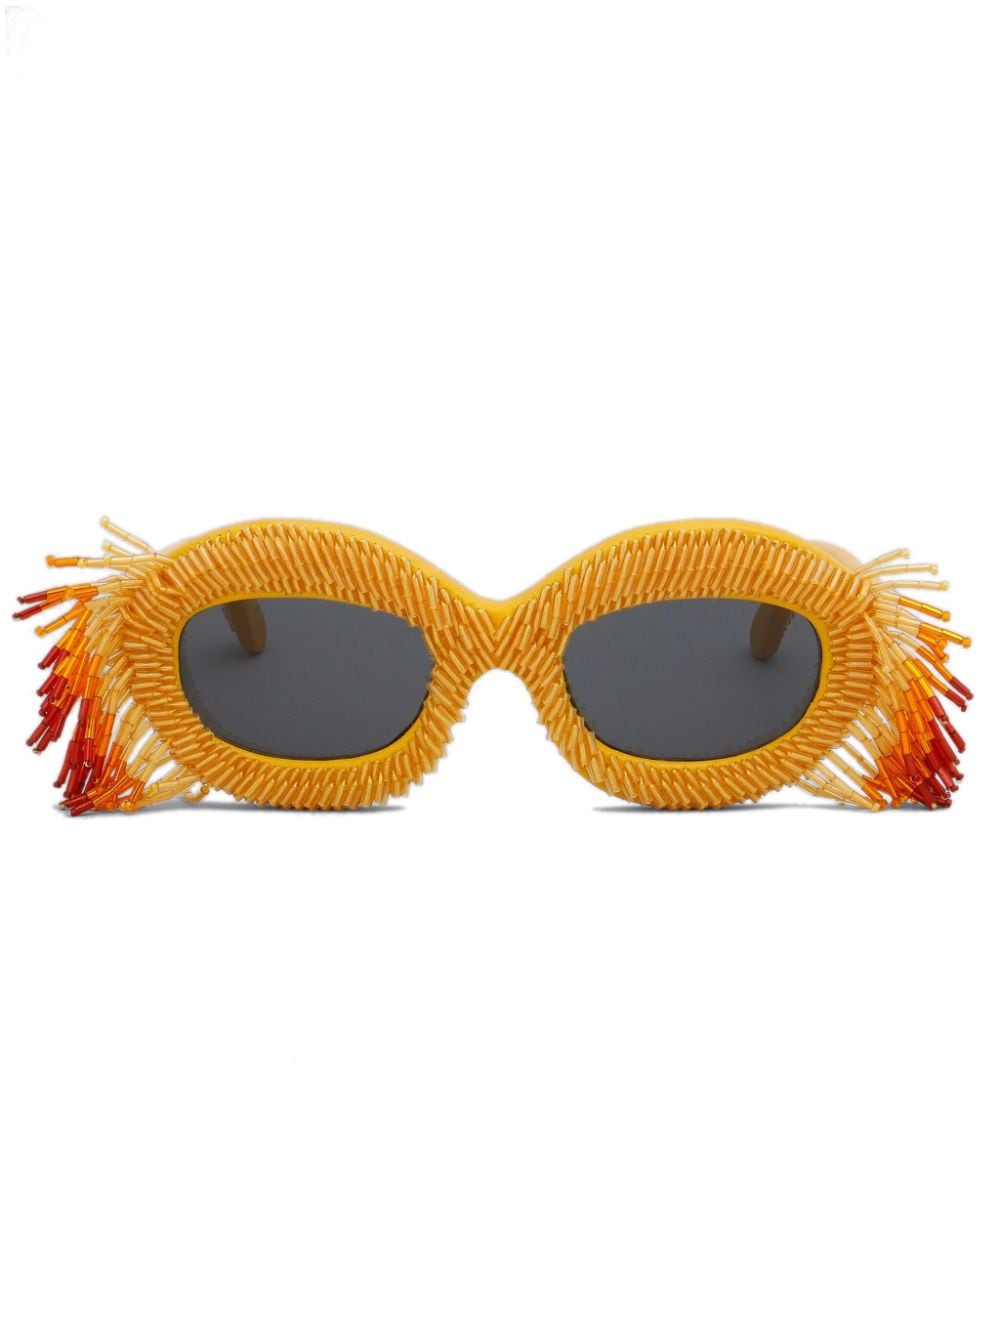 Marni x Retrosuperfuture Ik Kil Cenote Sonnenbrille mit ovalem Gestell - Gelb von Marni